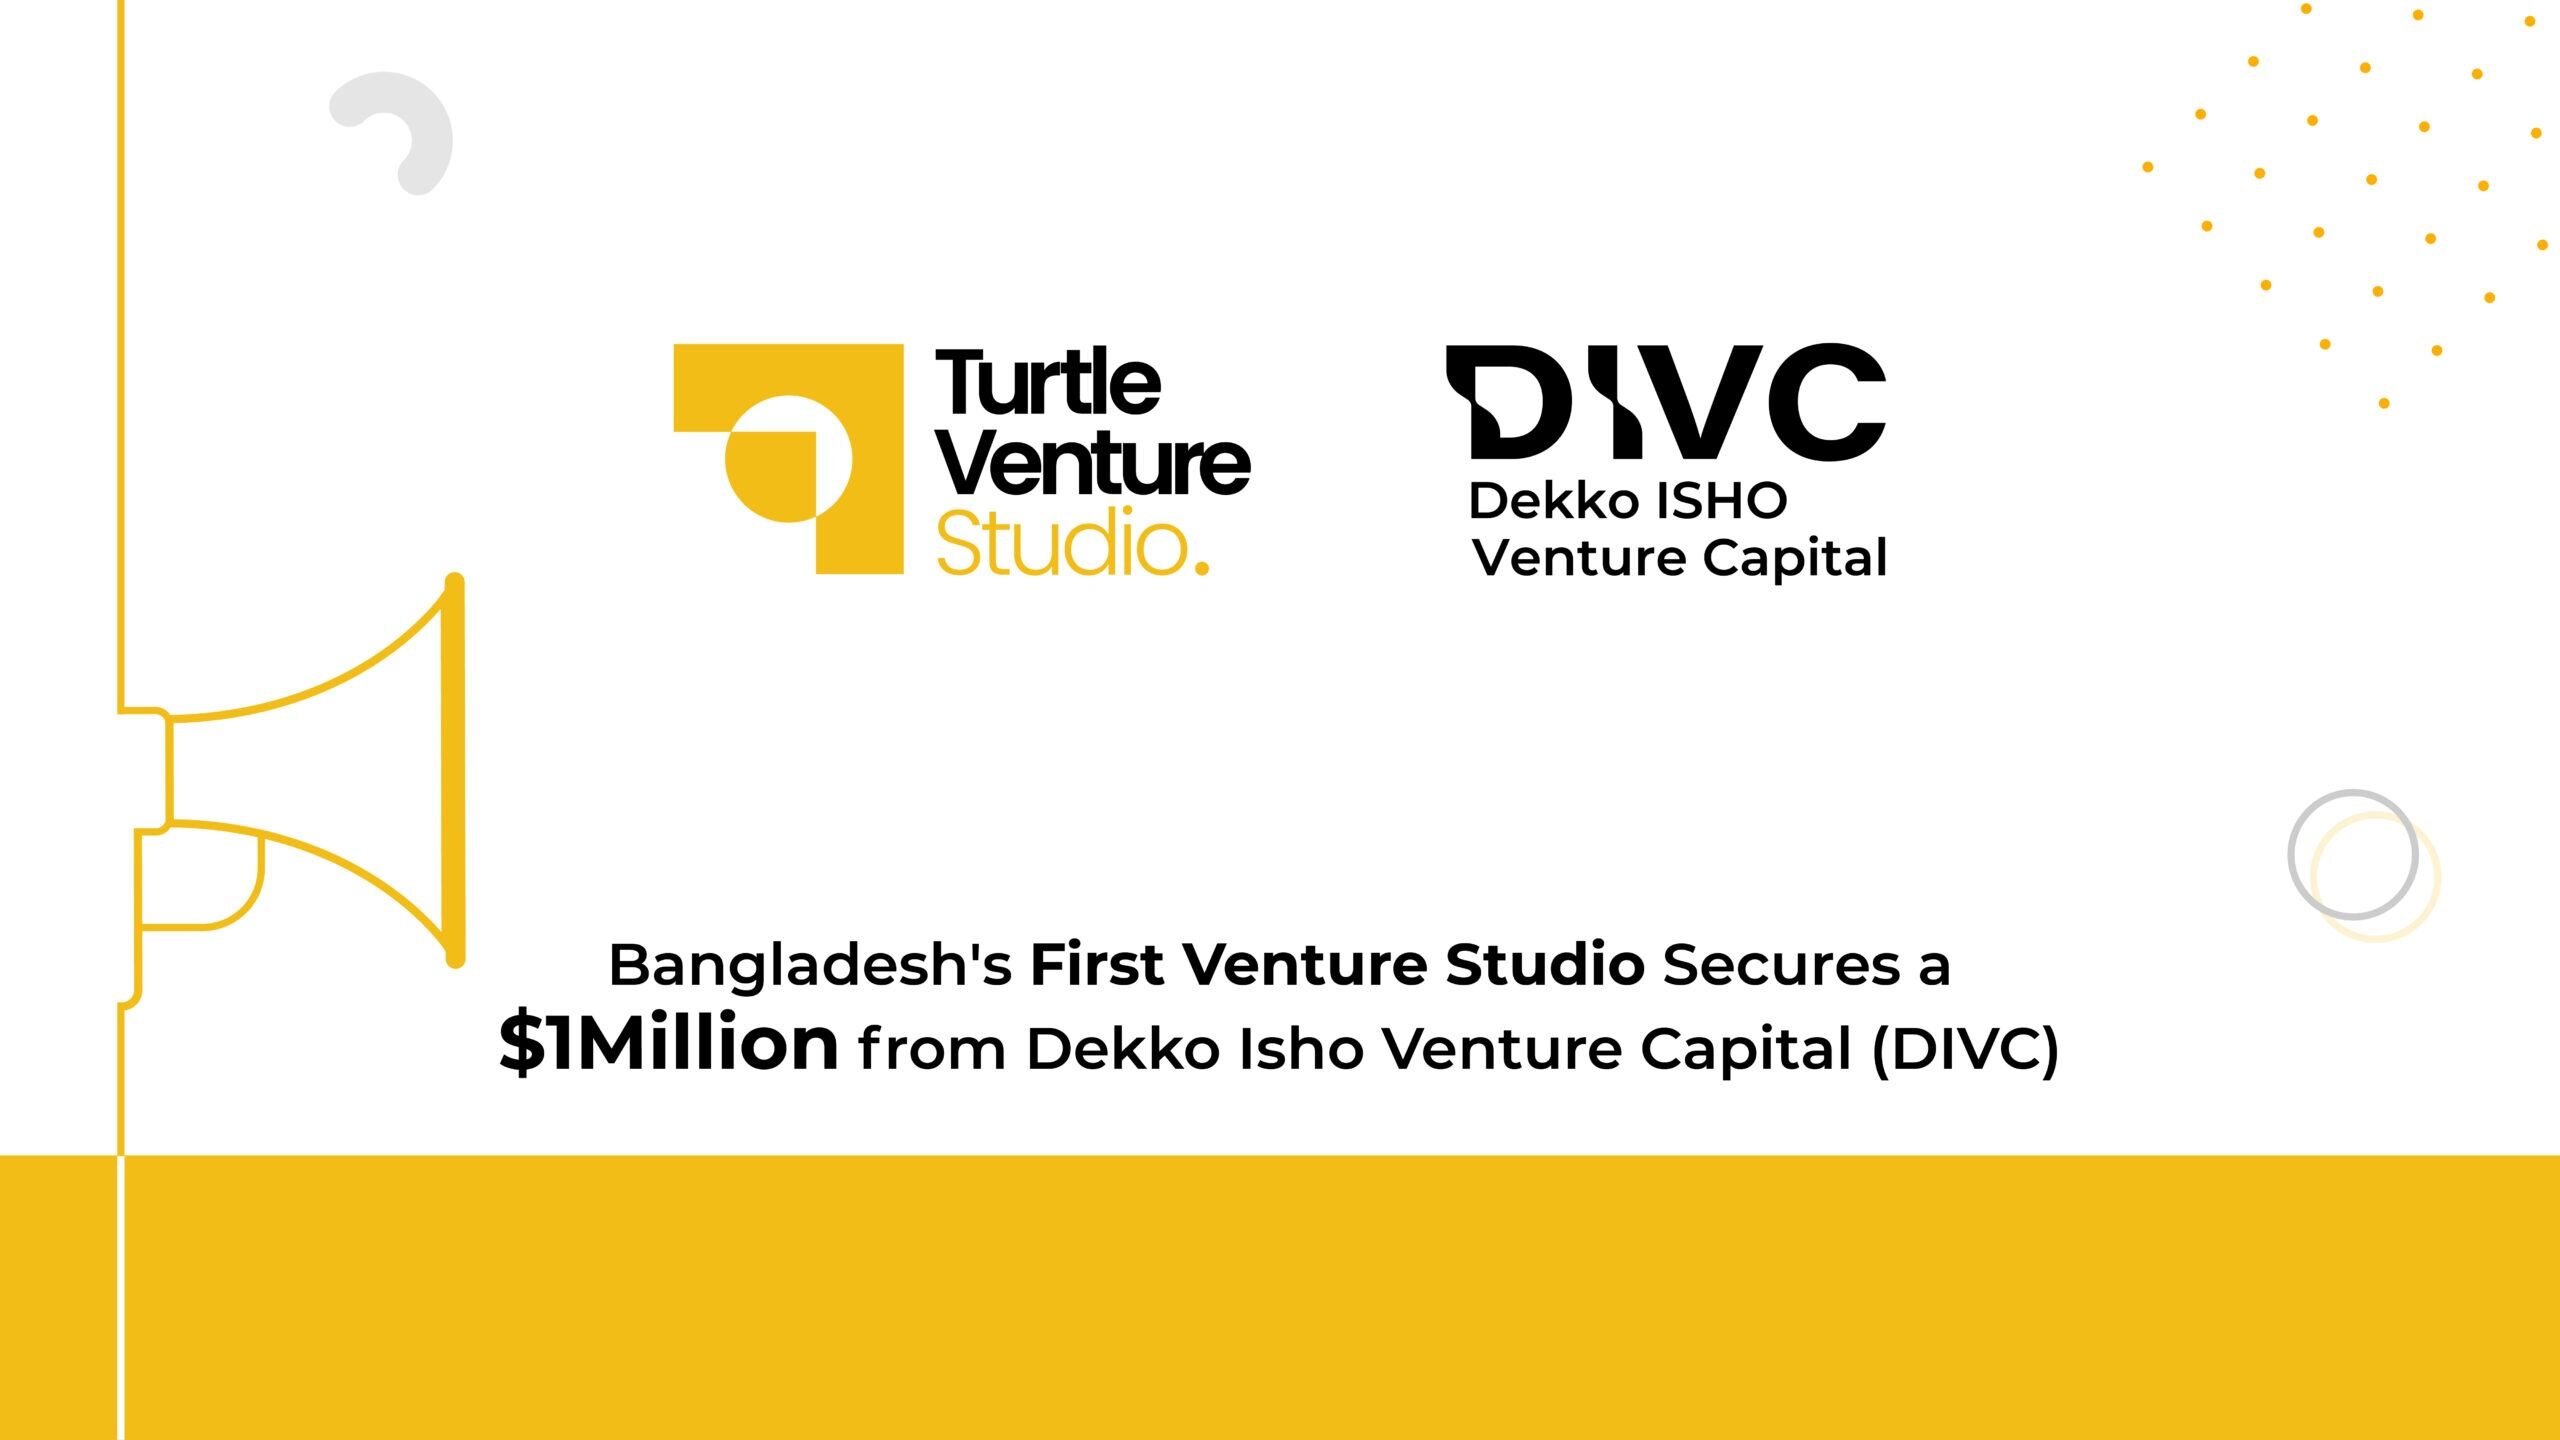 Bangladesh's First Venture Studio, Turtle Venture Studio, Has Raised USD $1 Million In Its First Round Of Funding-Markedium